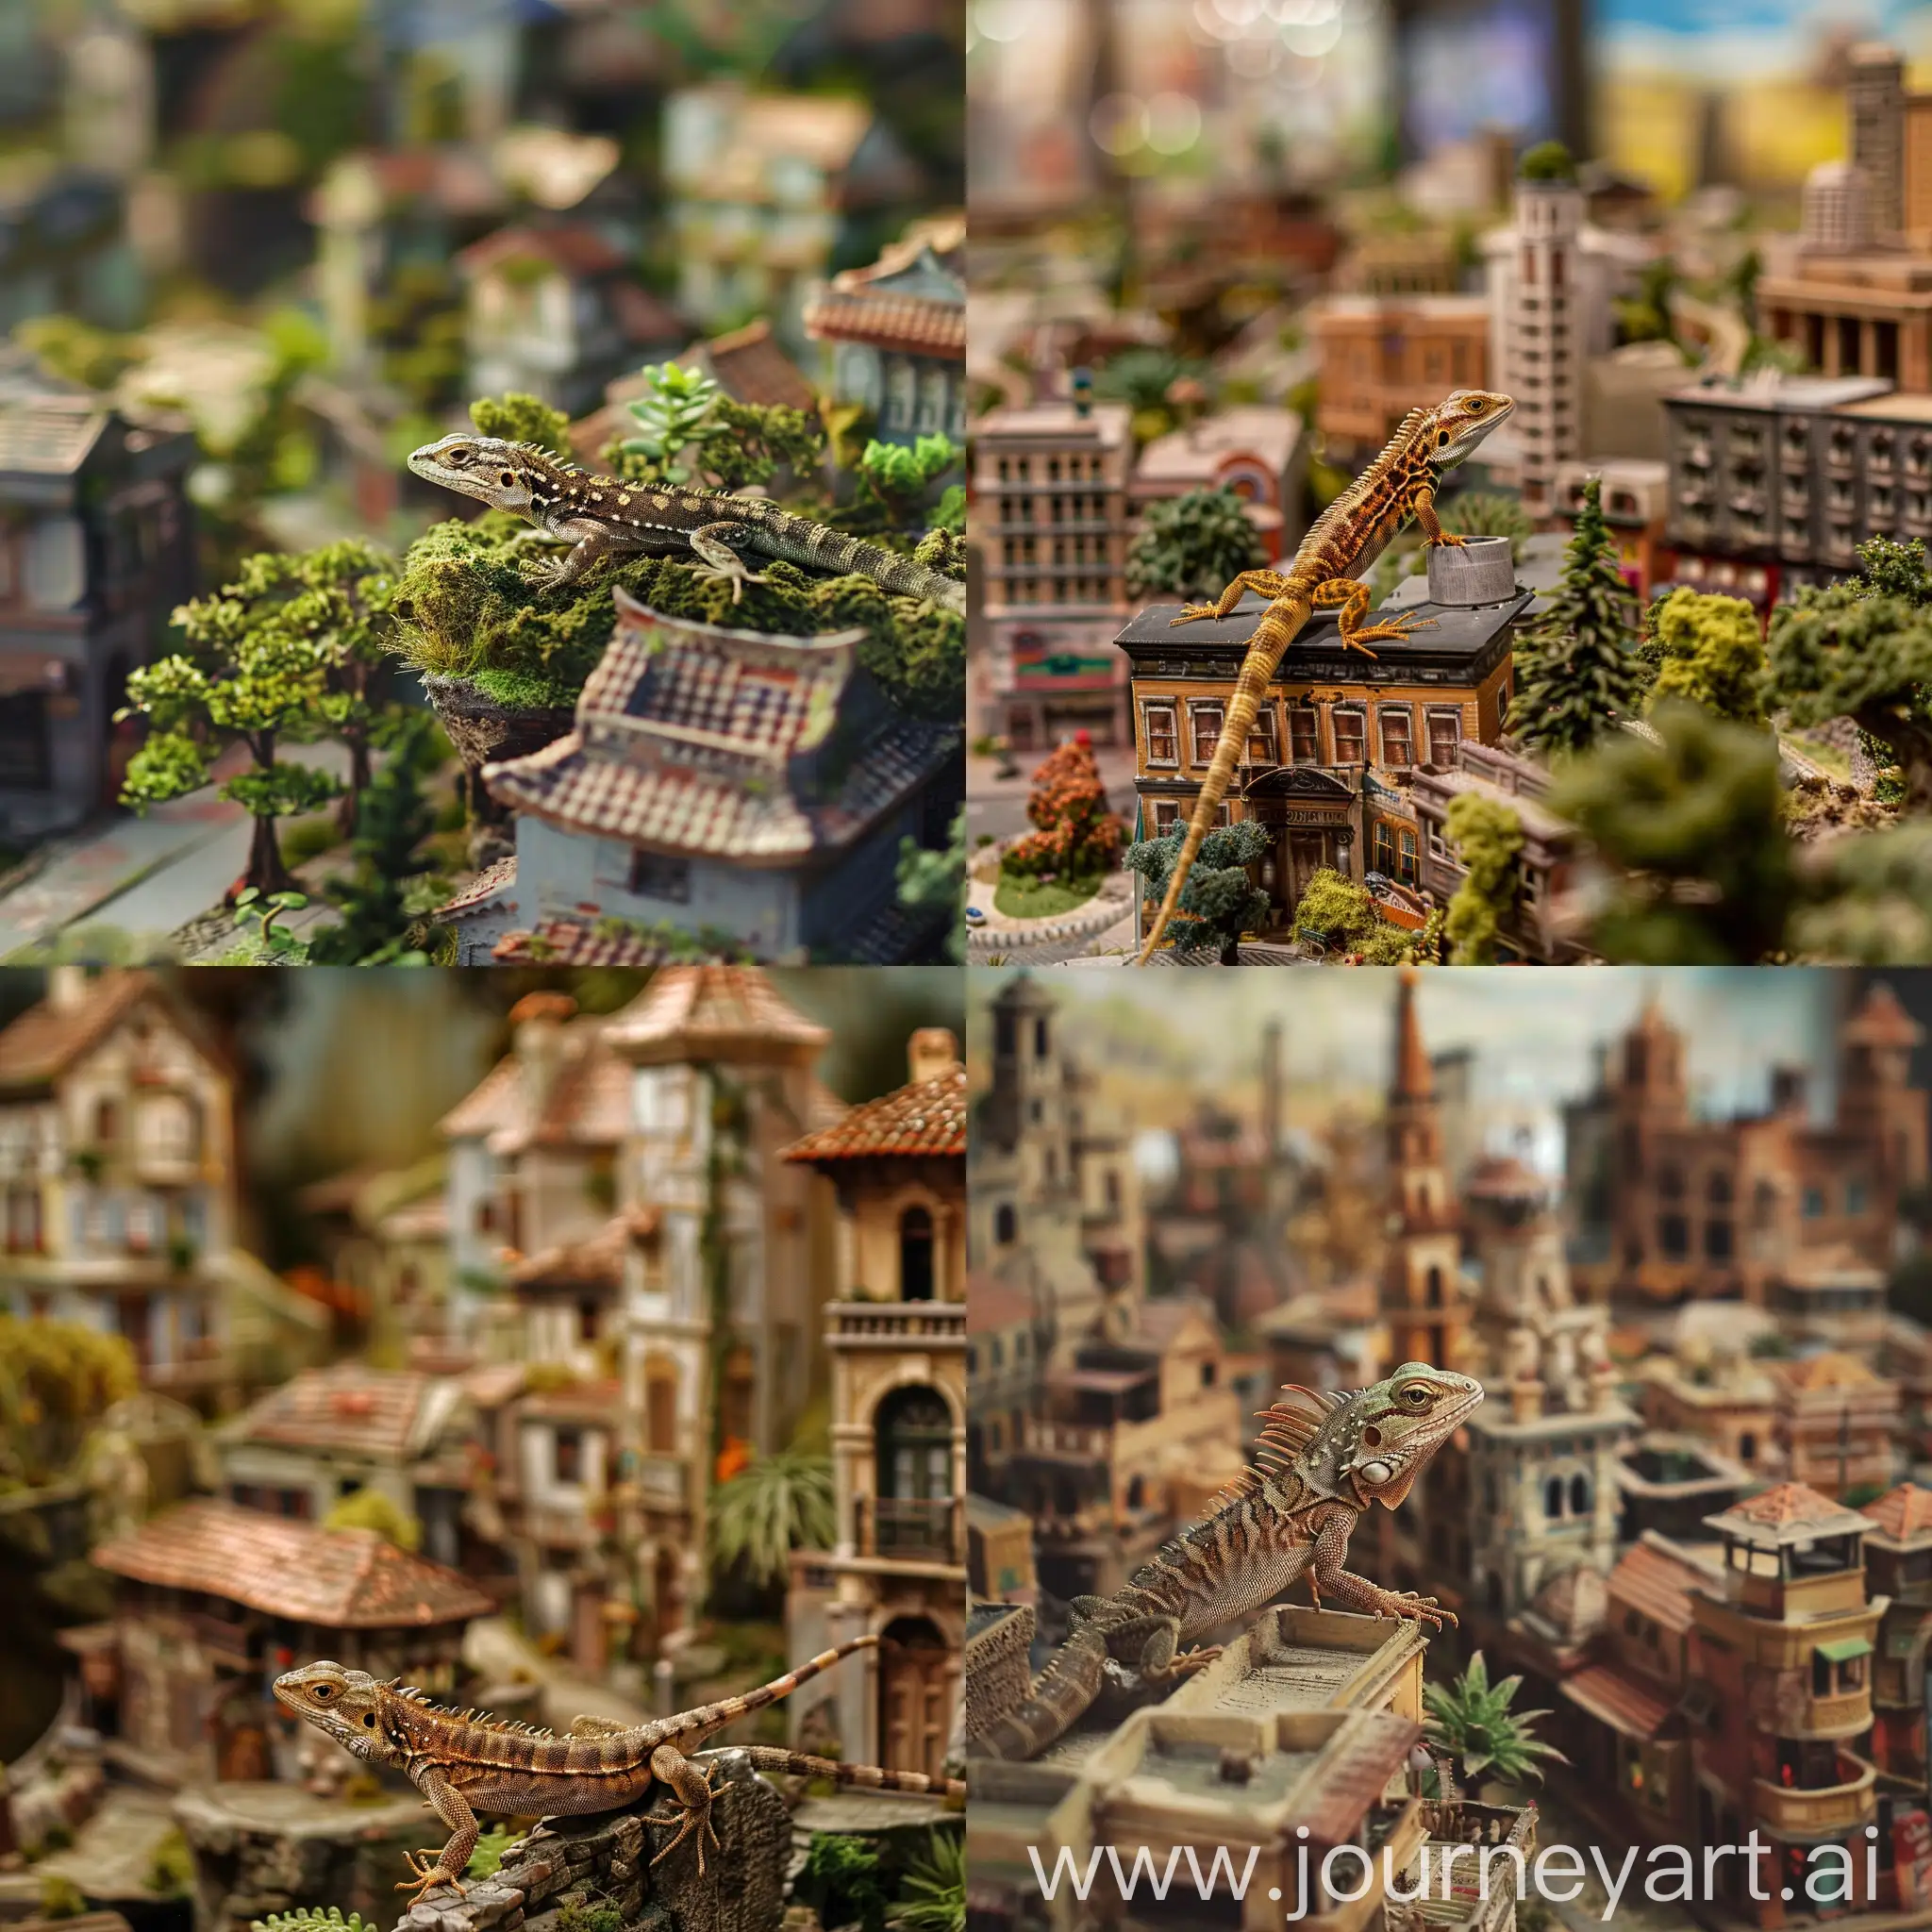 Lizard-Adventures-in-a-Detailed-Miniature-Urban-Landscape